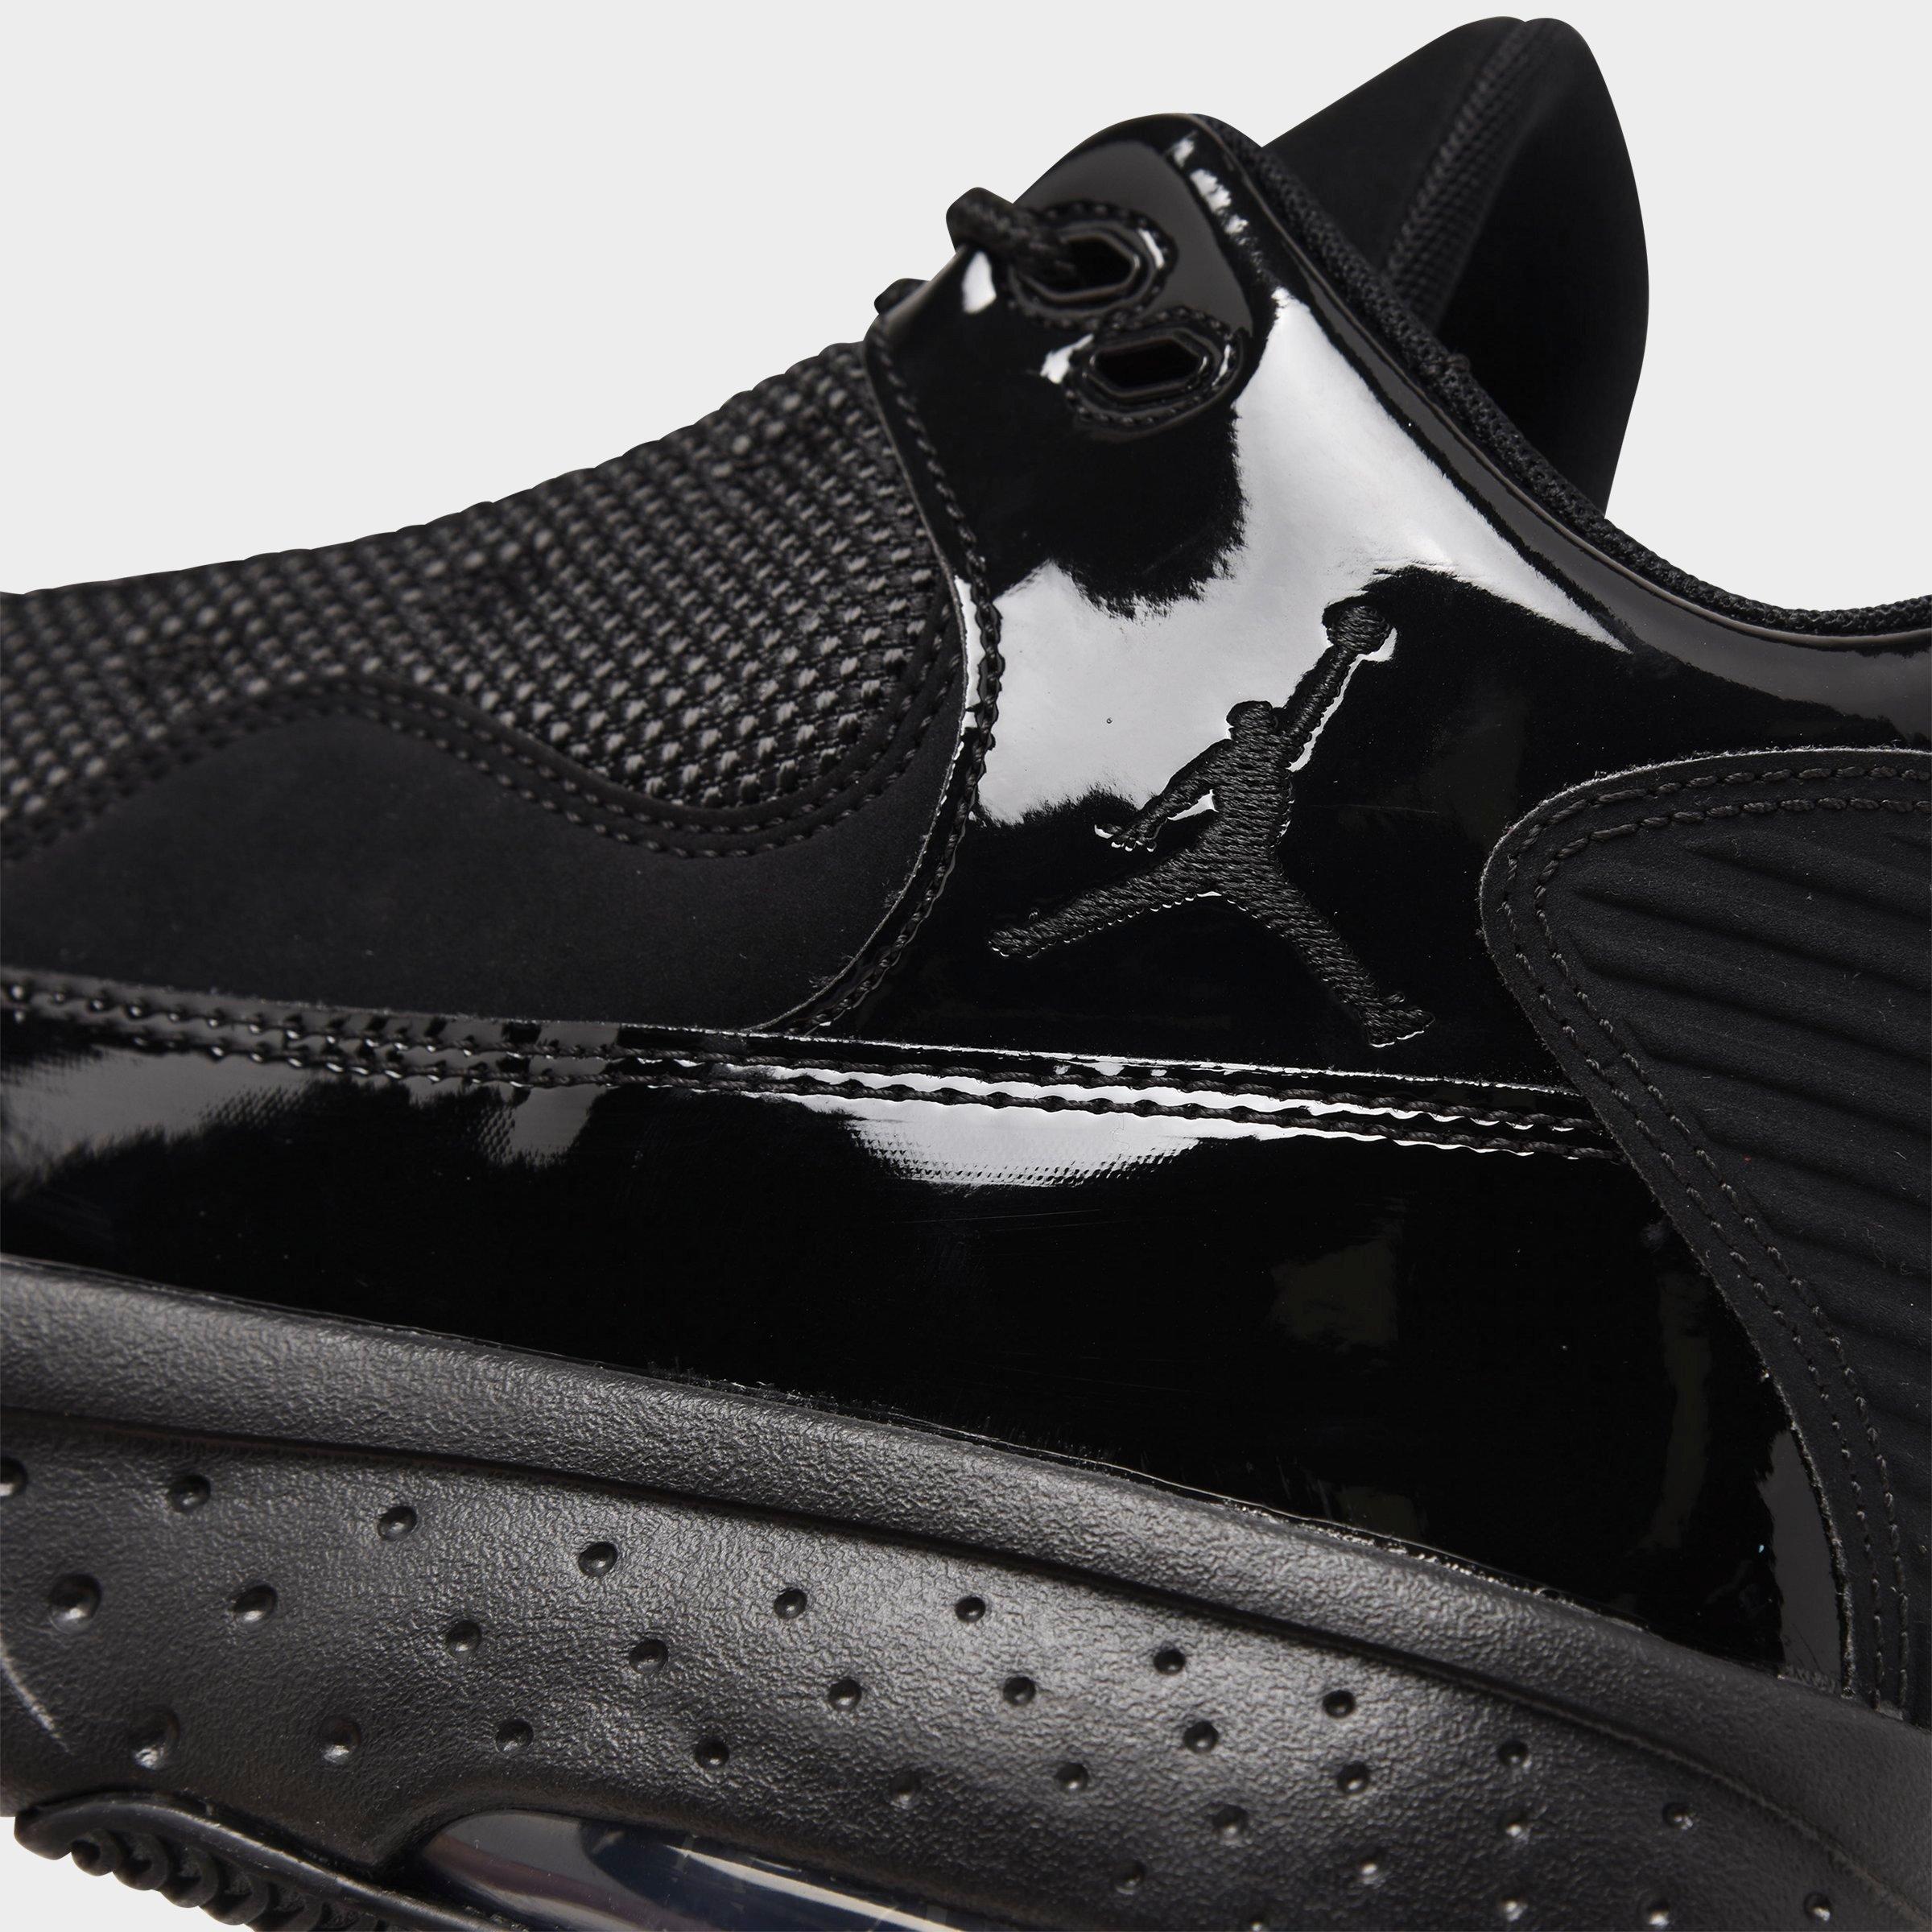 jordan max aura 2 black men's shoe